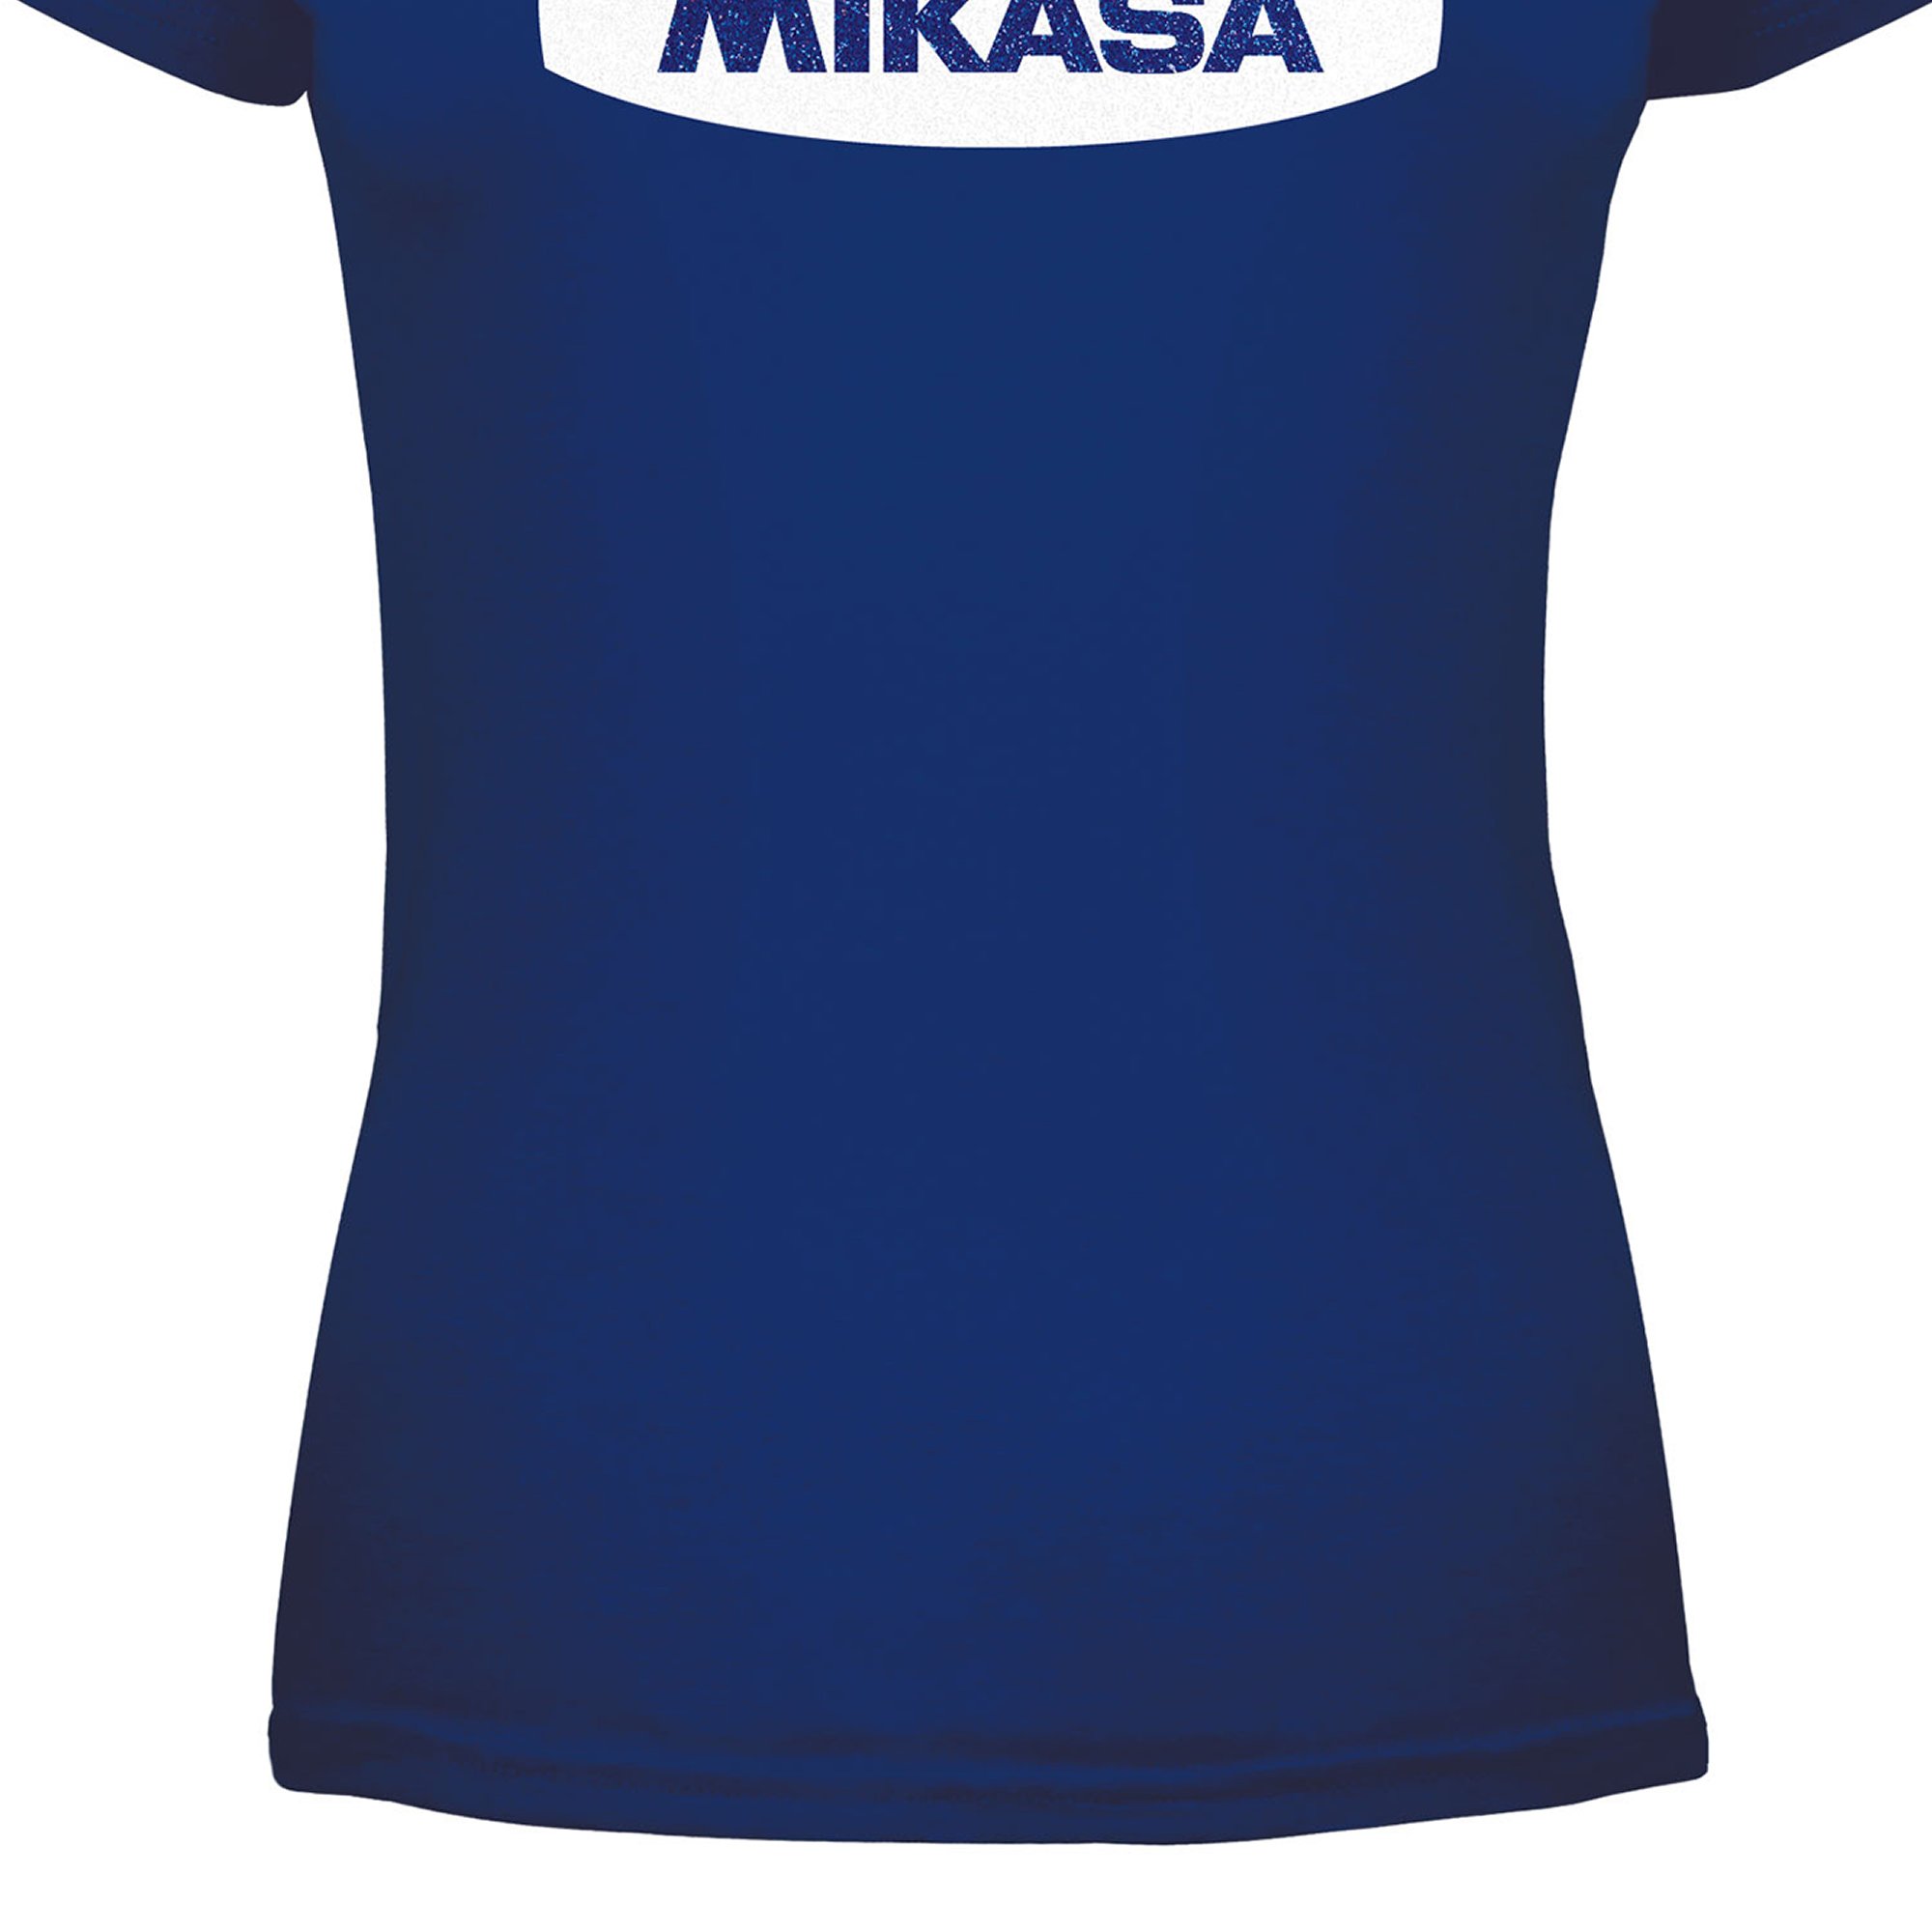 Mikasa Promo T-Shirt Damen